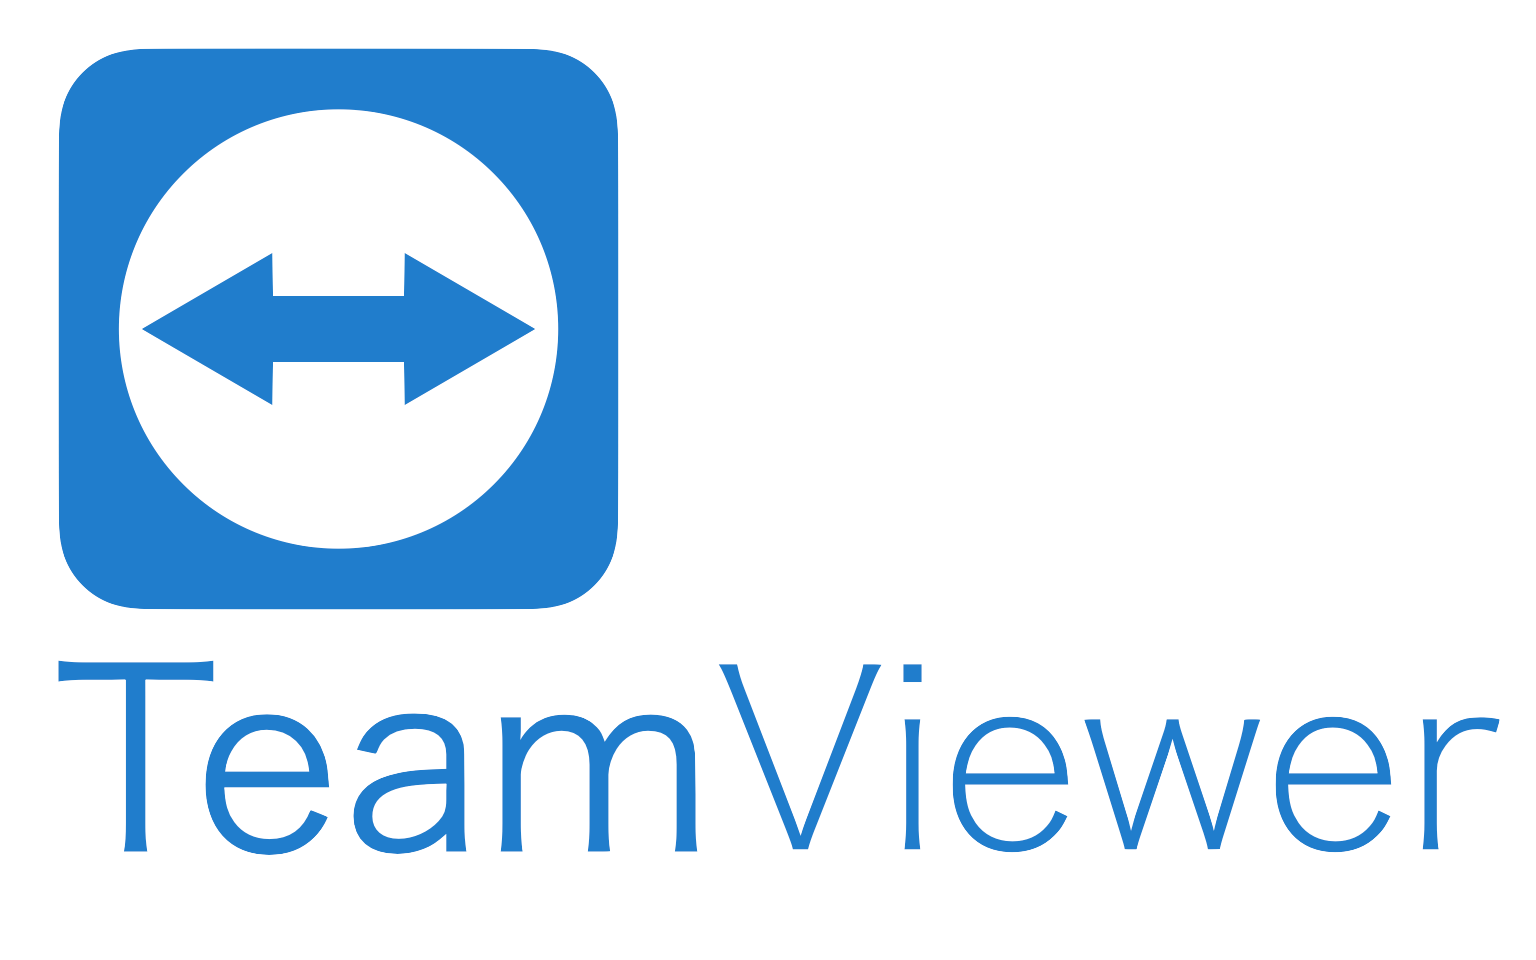 Download TeamViewer 12 Full Key Latest 2017 - Sortware Serial